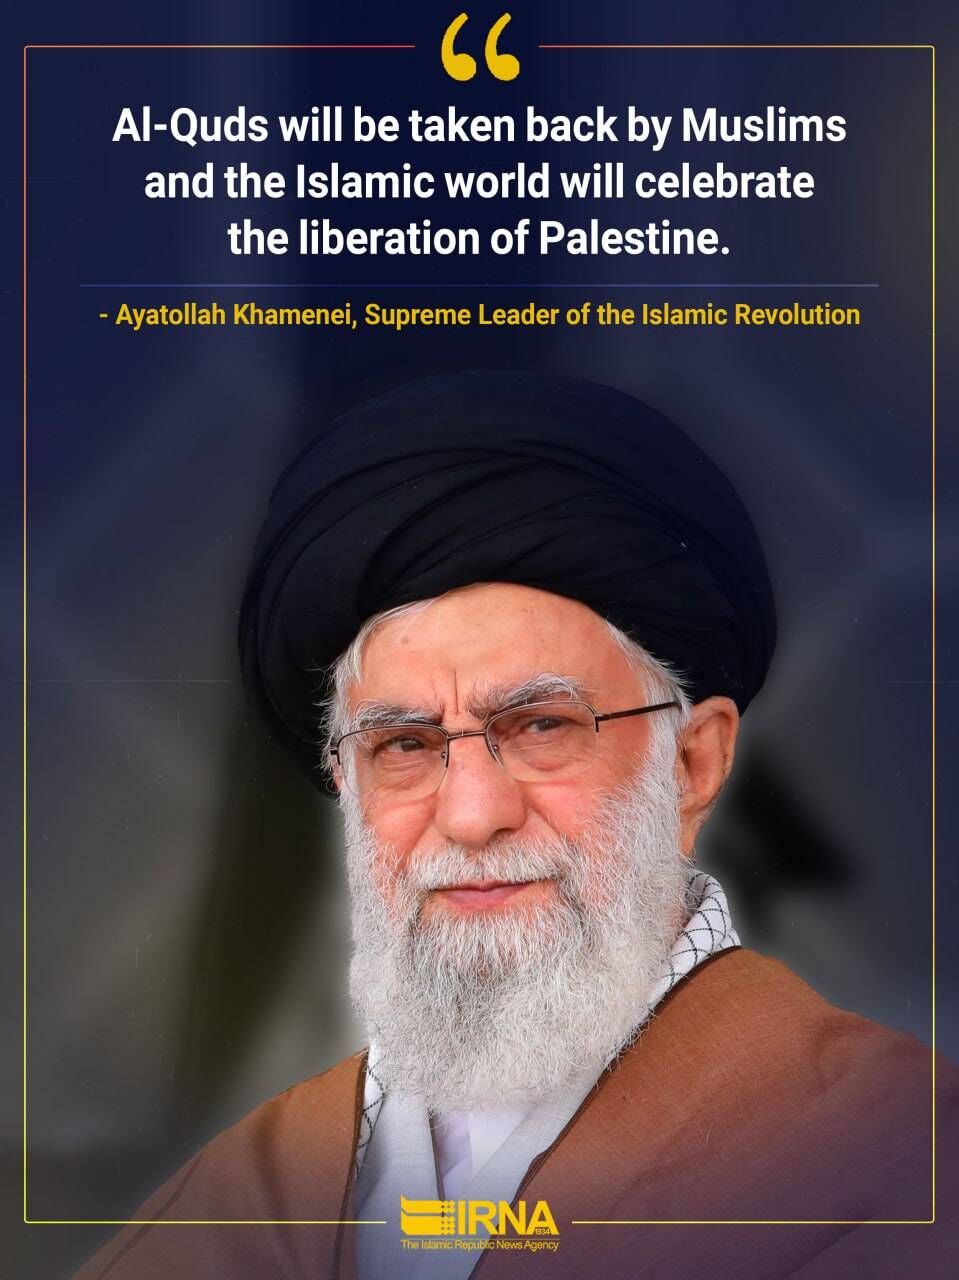 Supreme Leader: Islamic world will celebrate Palestine’s liberation